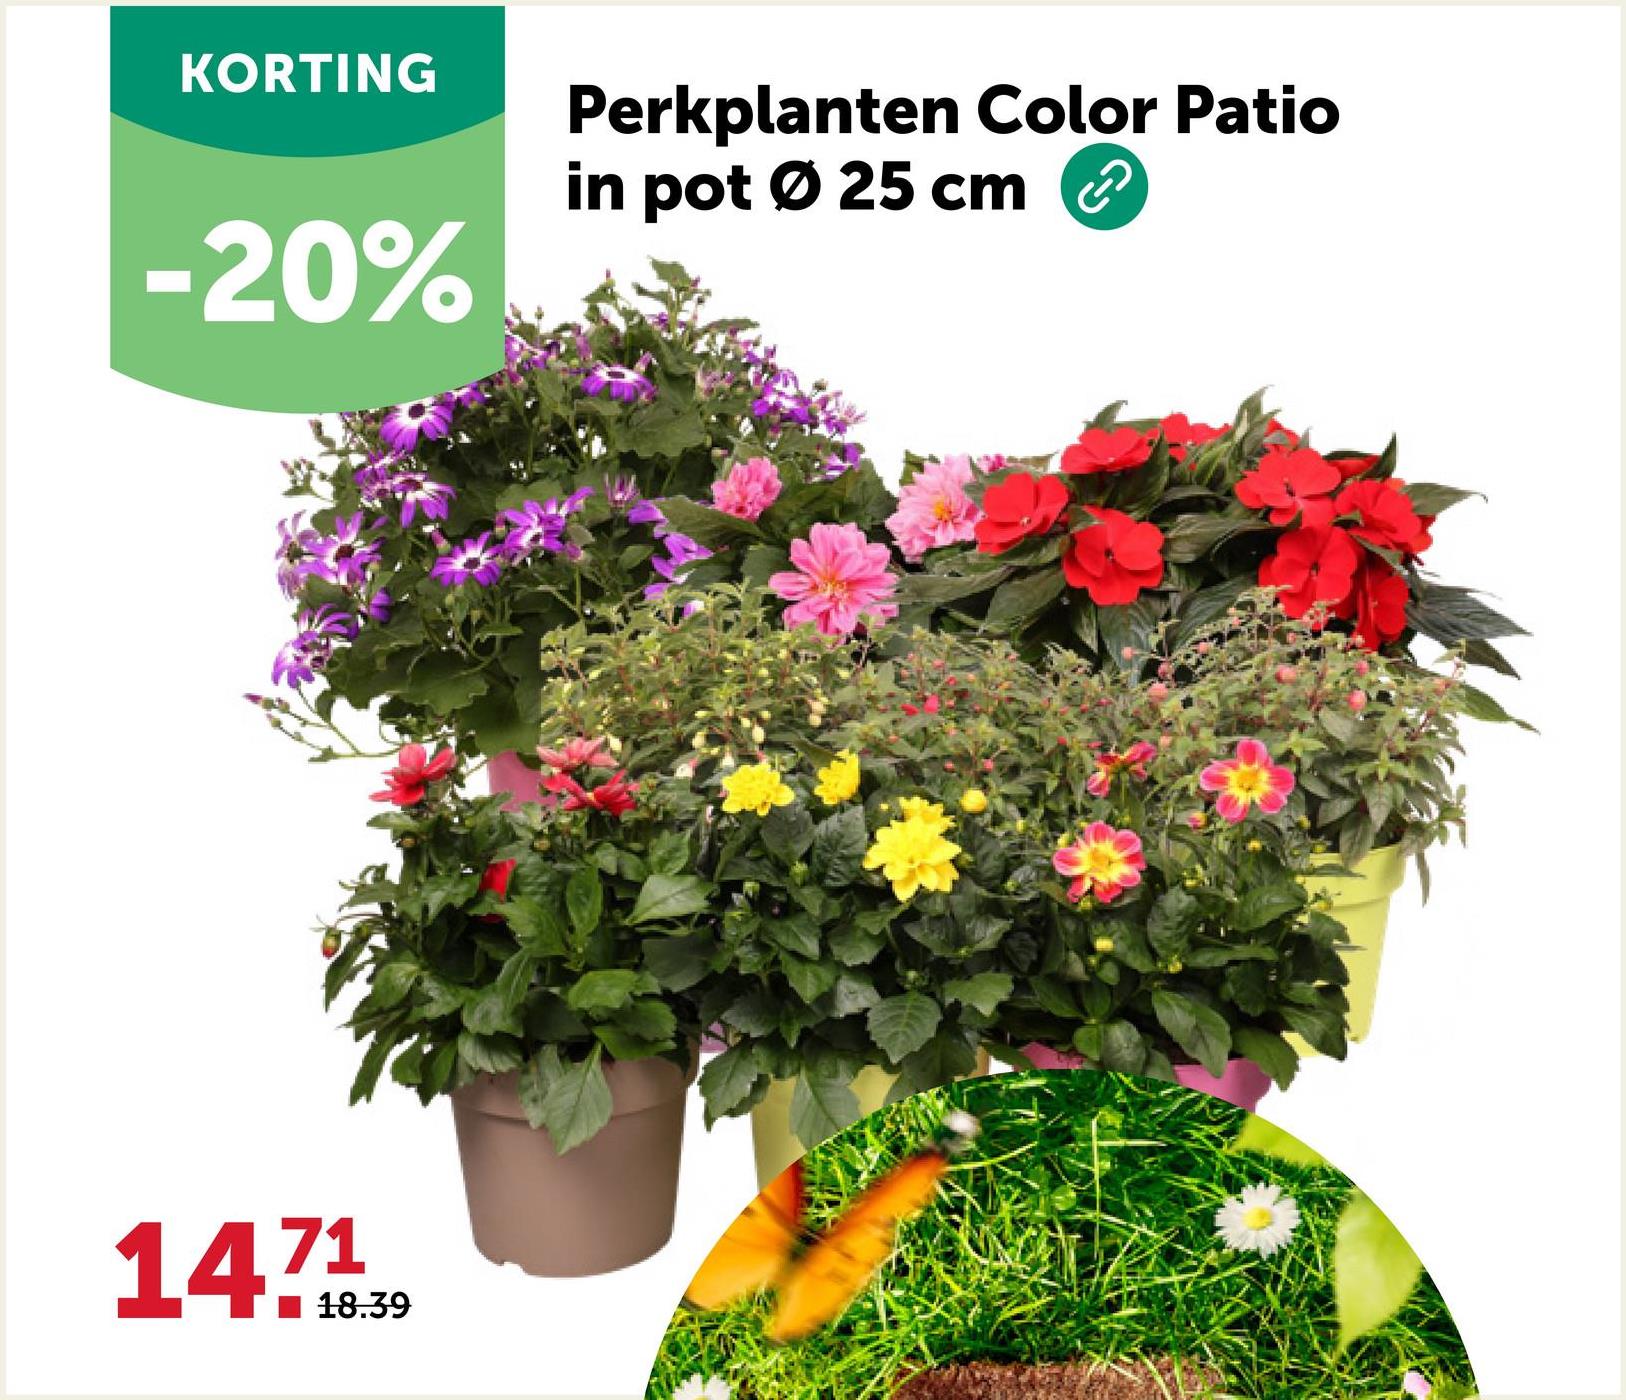 KORTING
-20%
Perkplanten Color Patio
in pot Ø 25 cm
147139
18.39